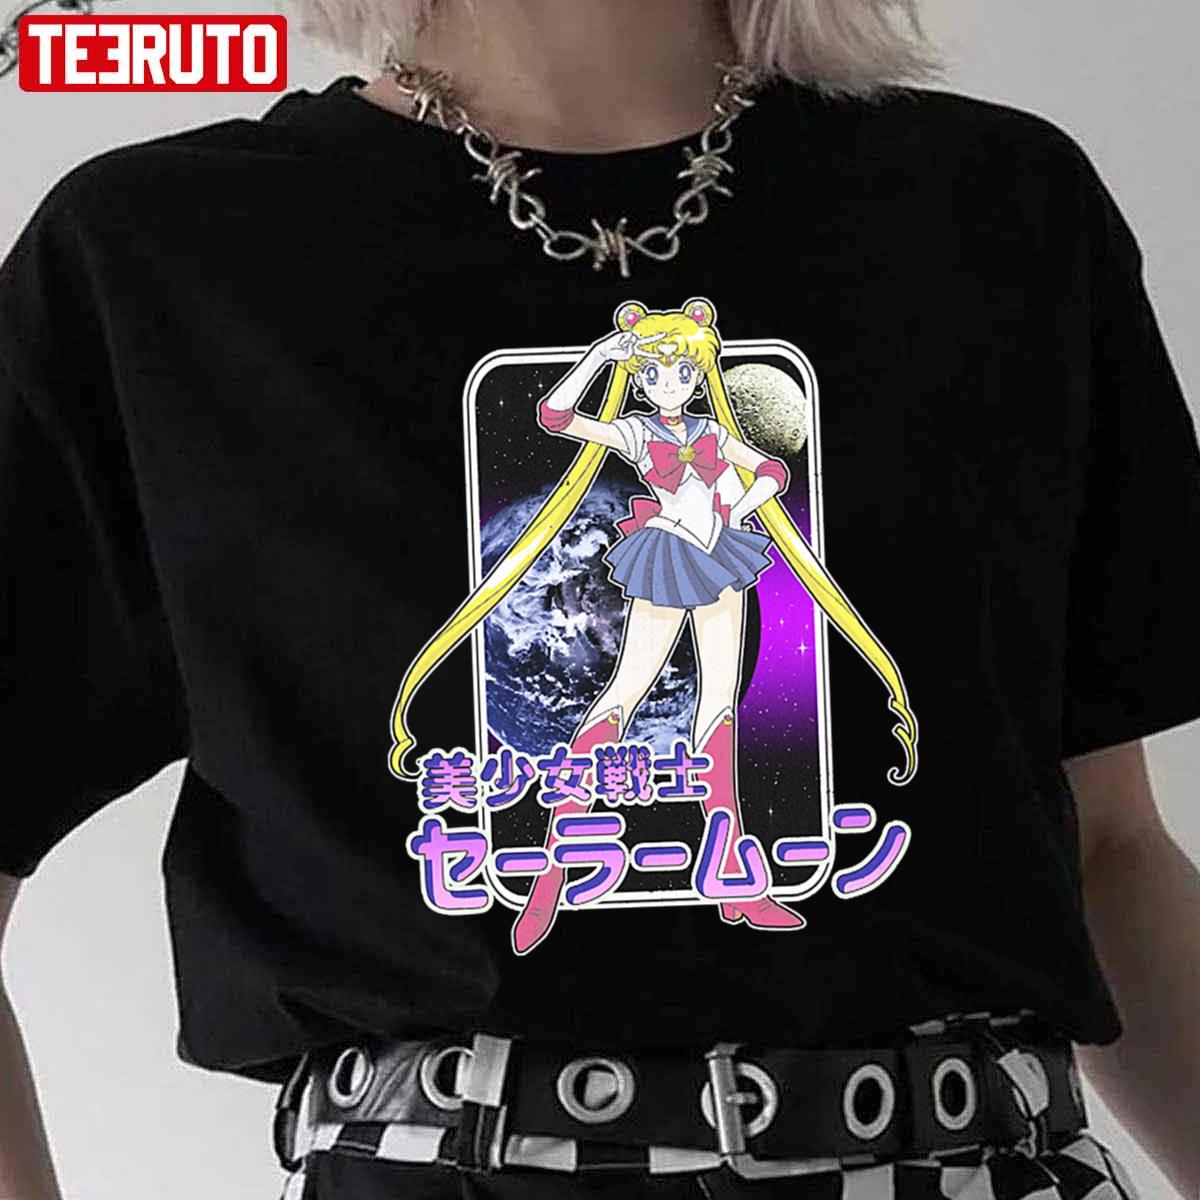 The Sailor Anime Manga Japanese Character Artwork Unisex T-Shirt